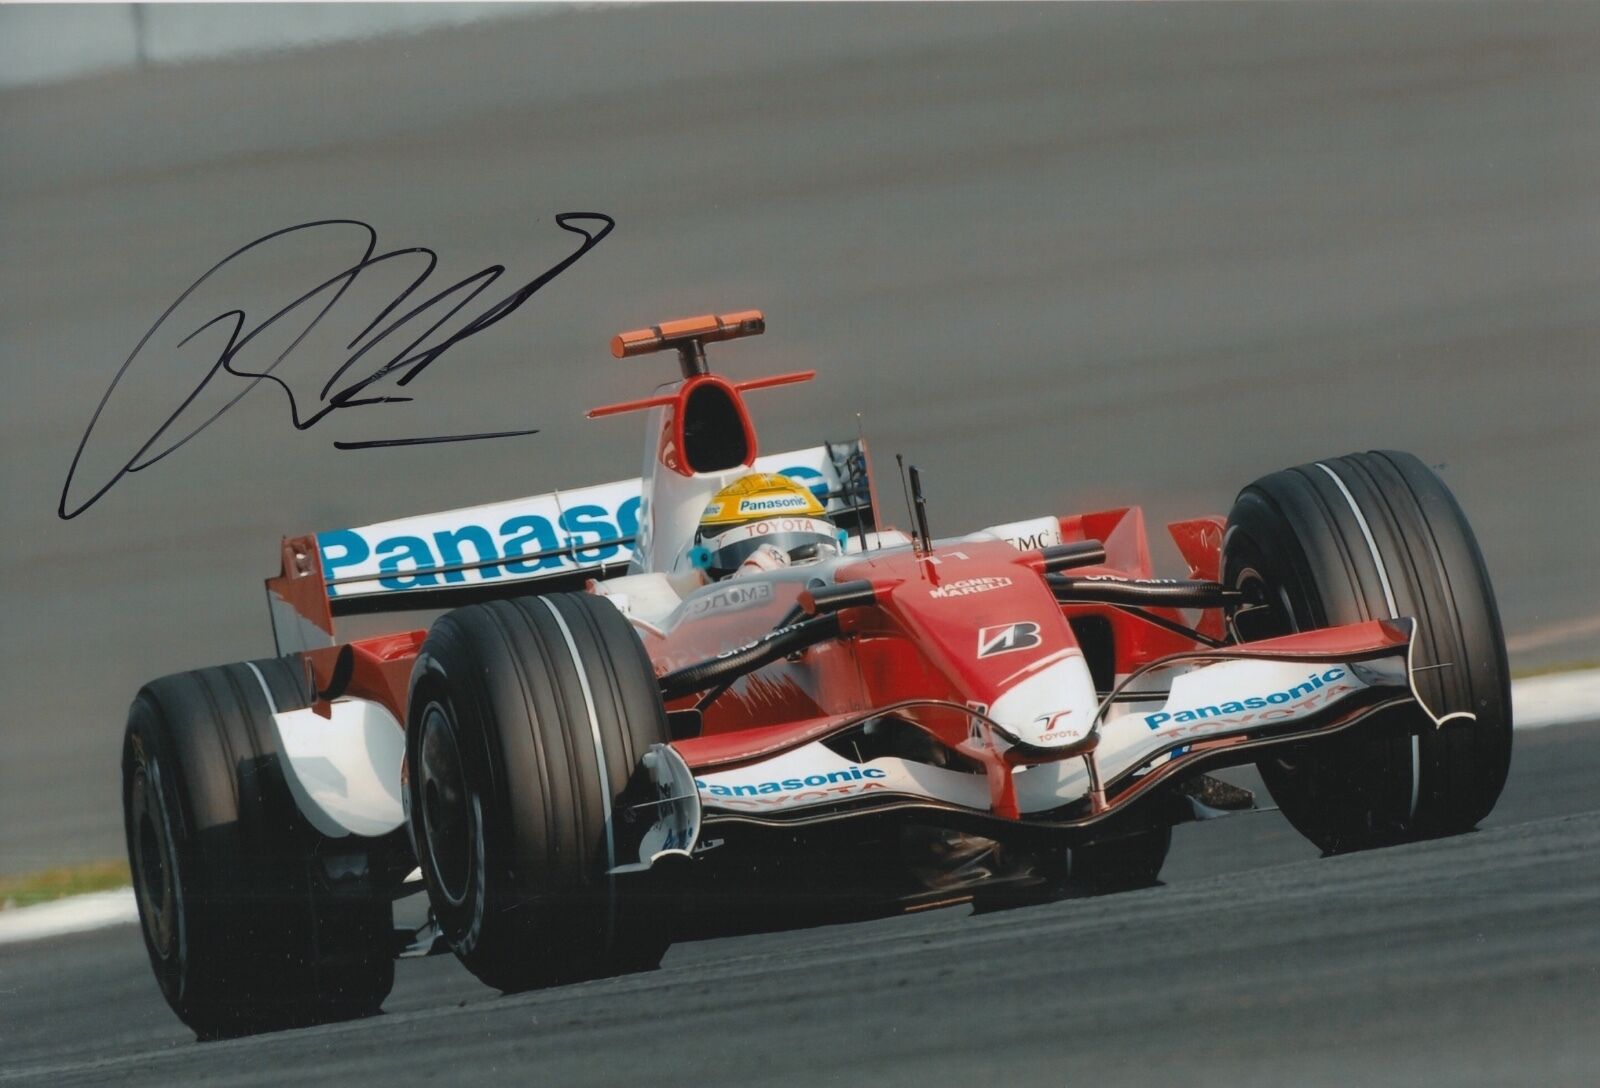 Ralf Schumacher Hand Signed Panasonic Toyota F1 12x8 Photo Poster painting.